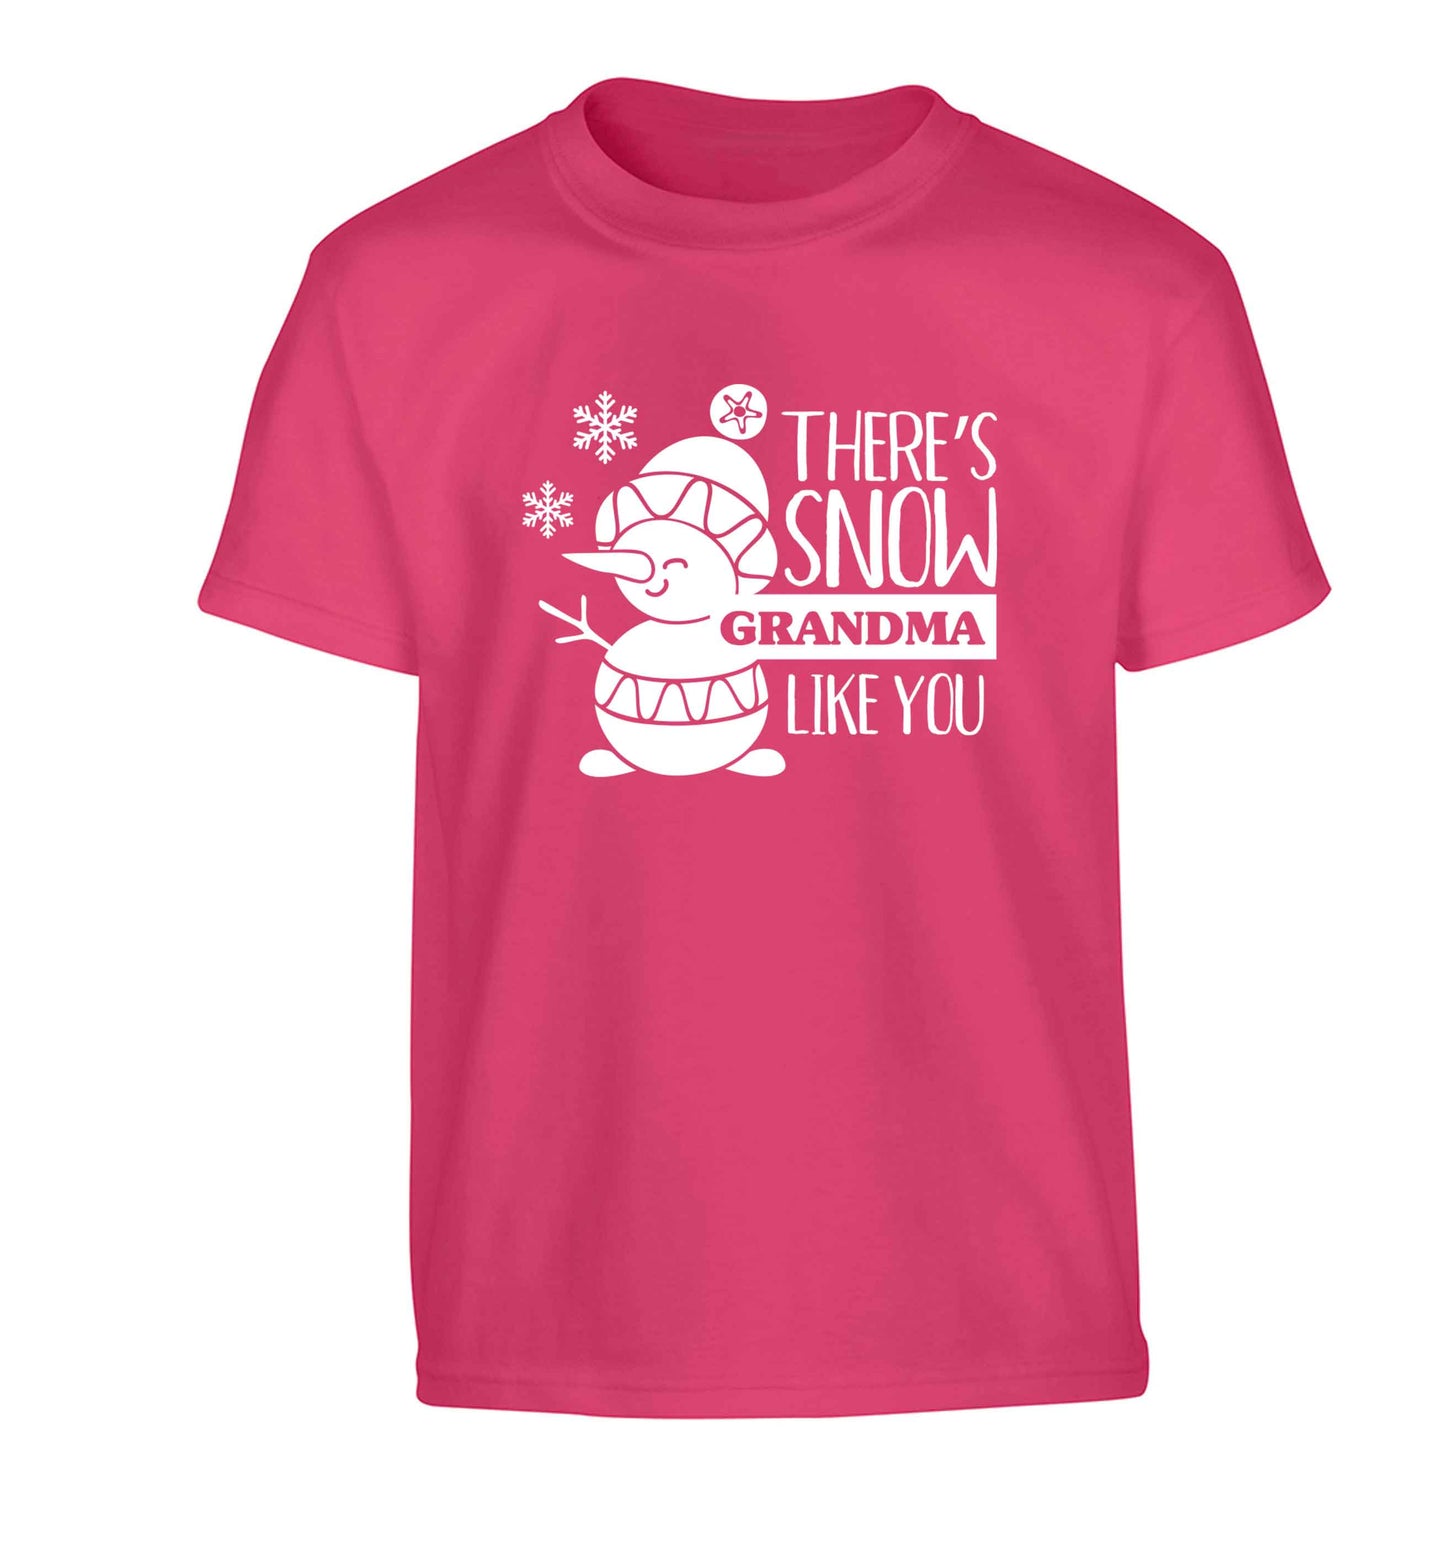 There's snow grandma like you Children's pink Tshirt 12-13 Years